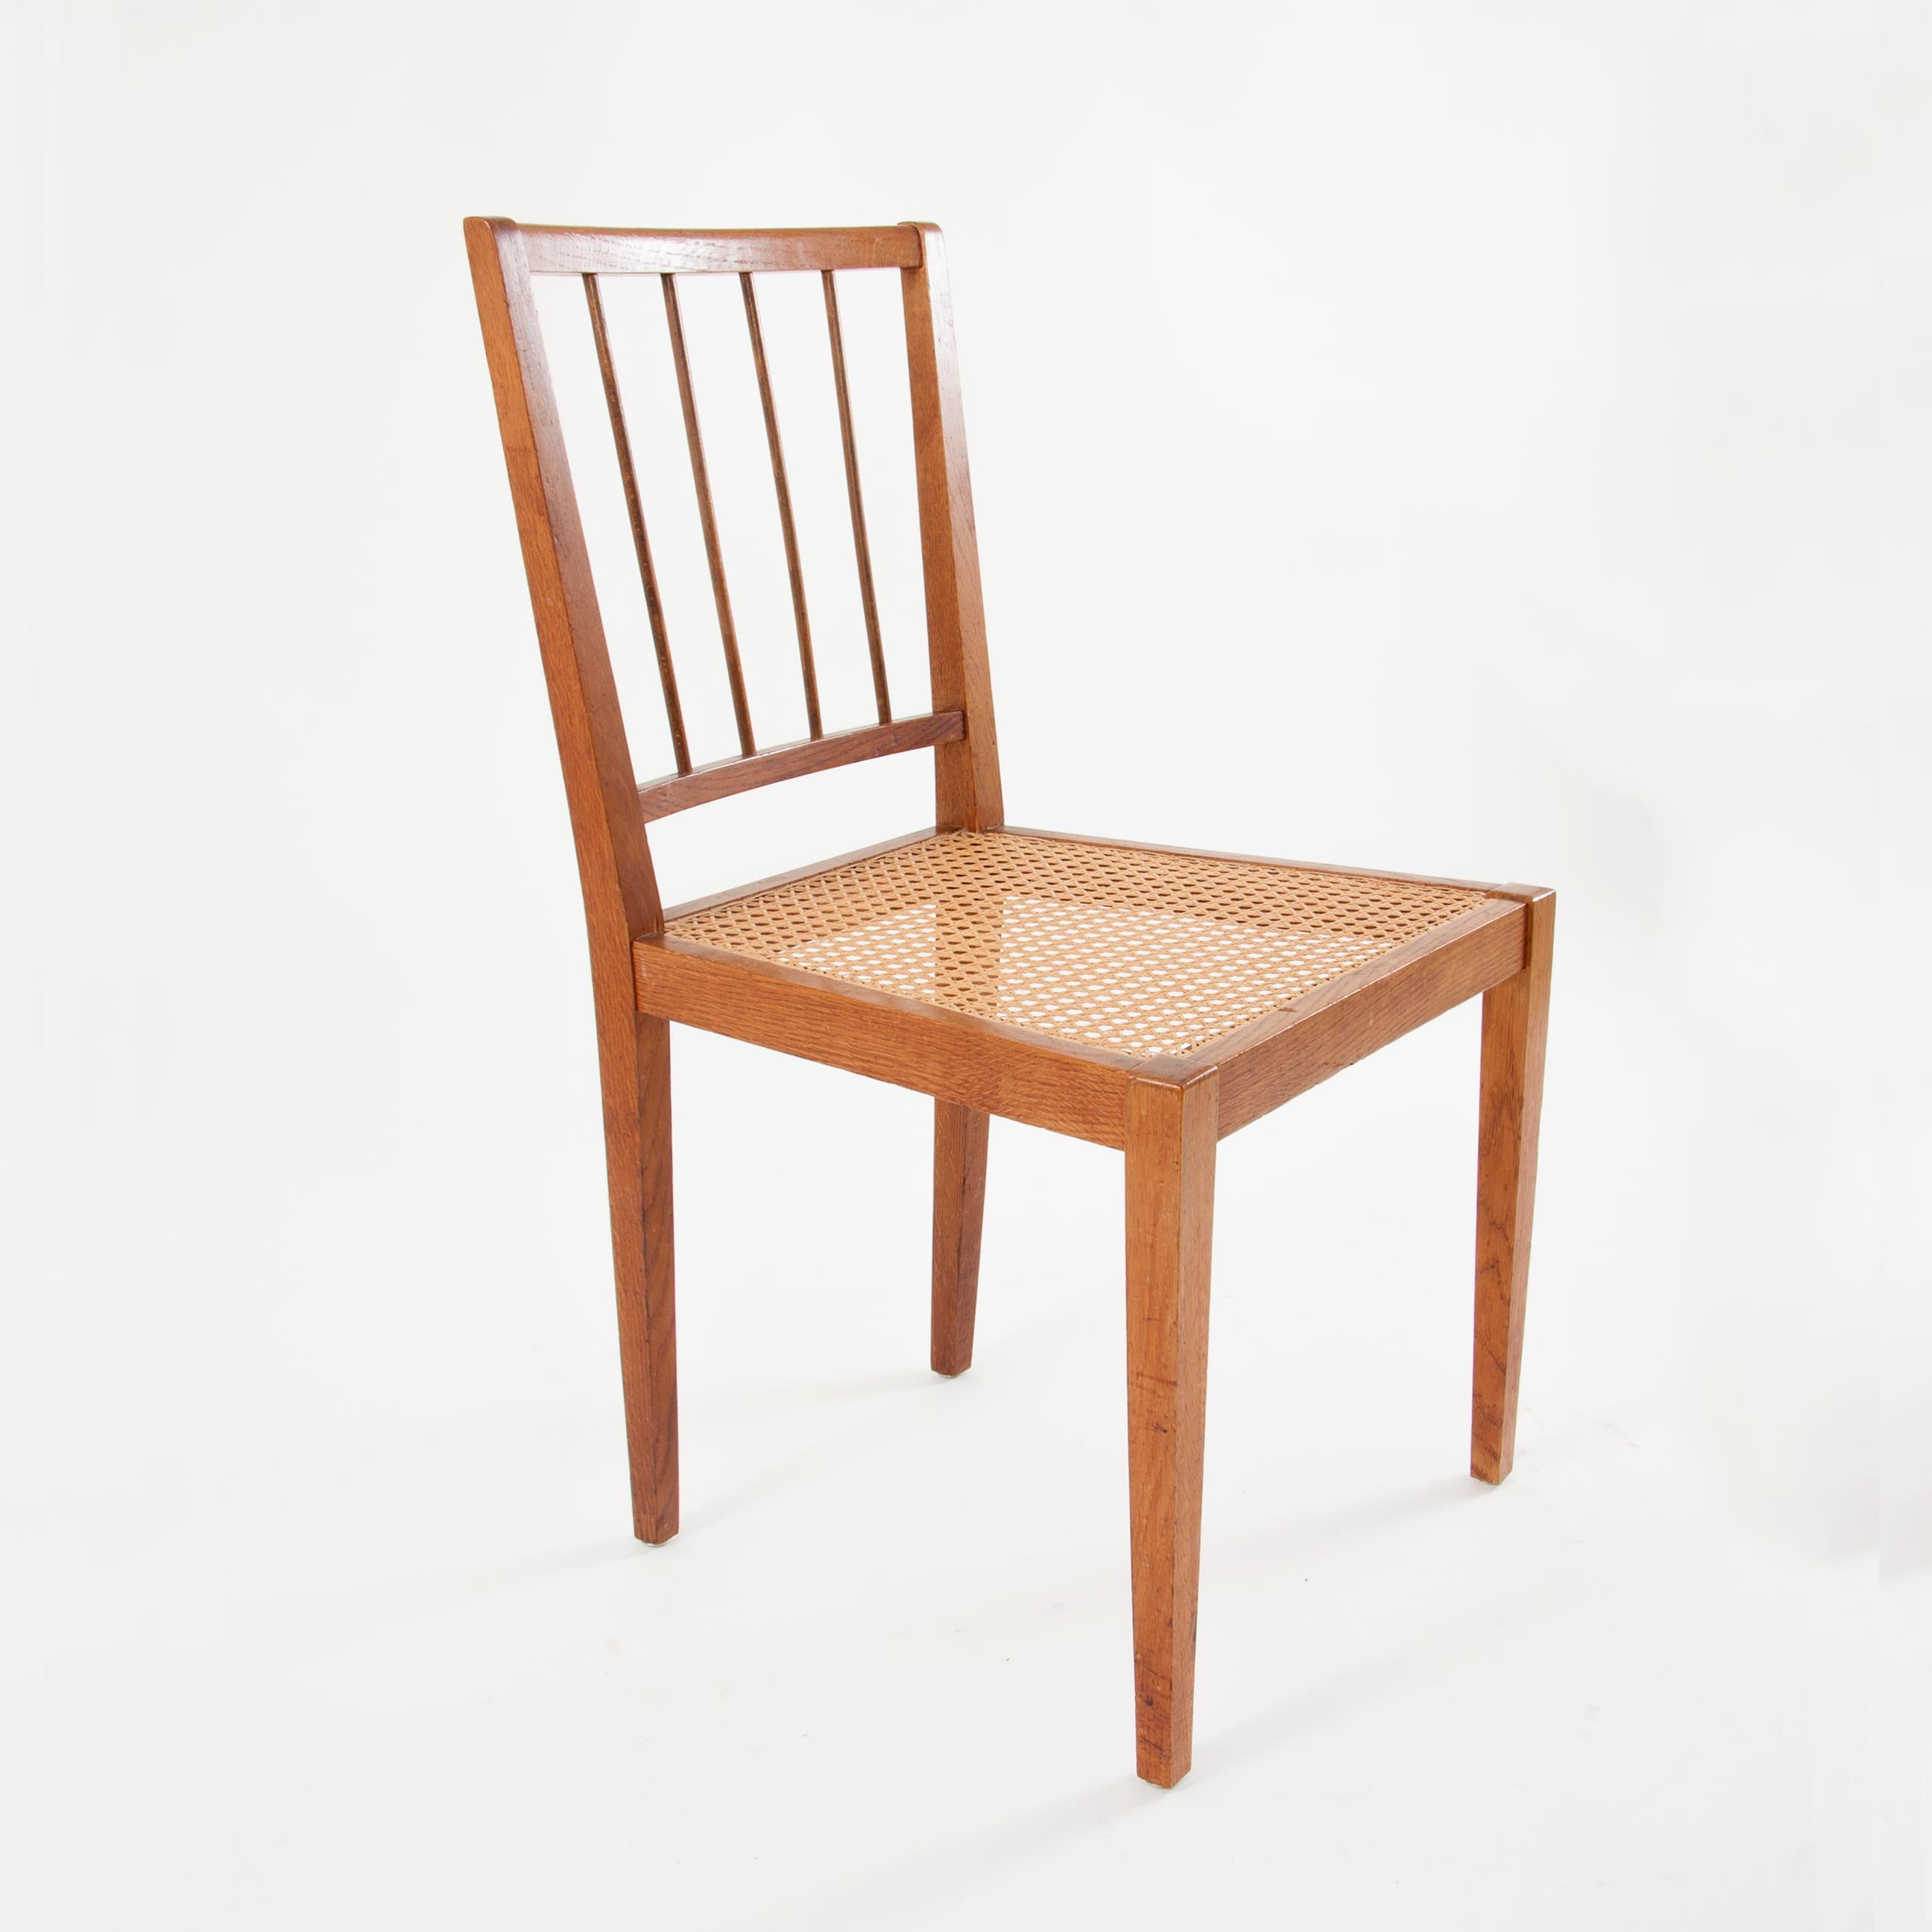 Two Elegant Werkstätte Hagenauer Chairs M006 by Julius Jirasek, Austria, 1930 For Sale 10